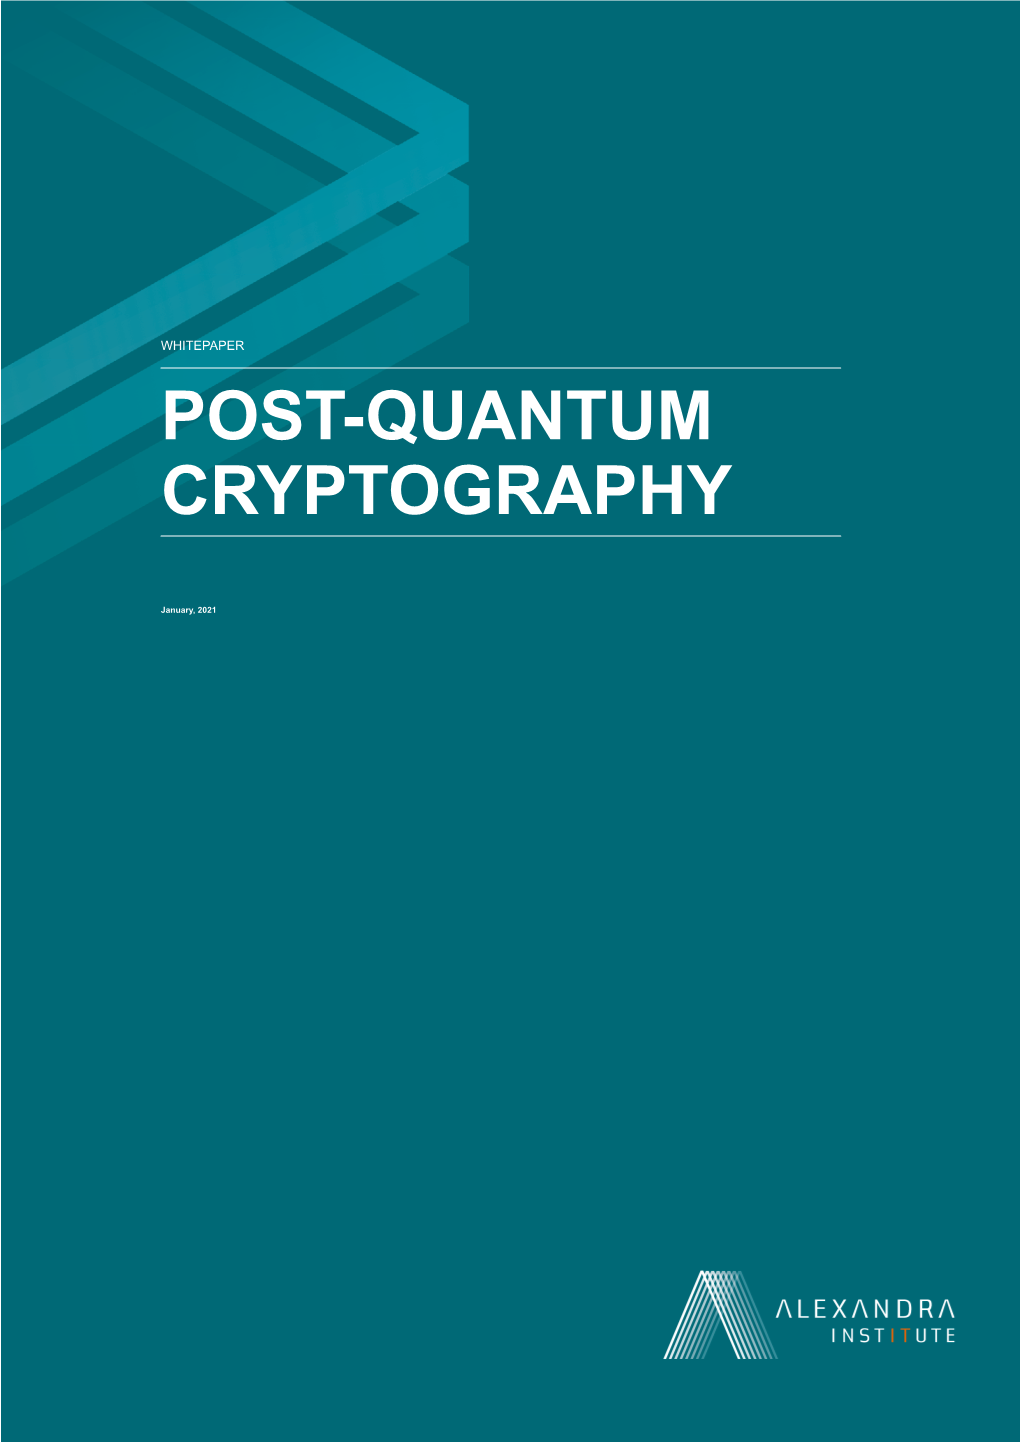 Postquantum Cryptography